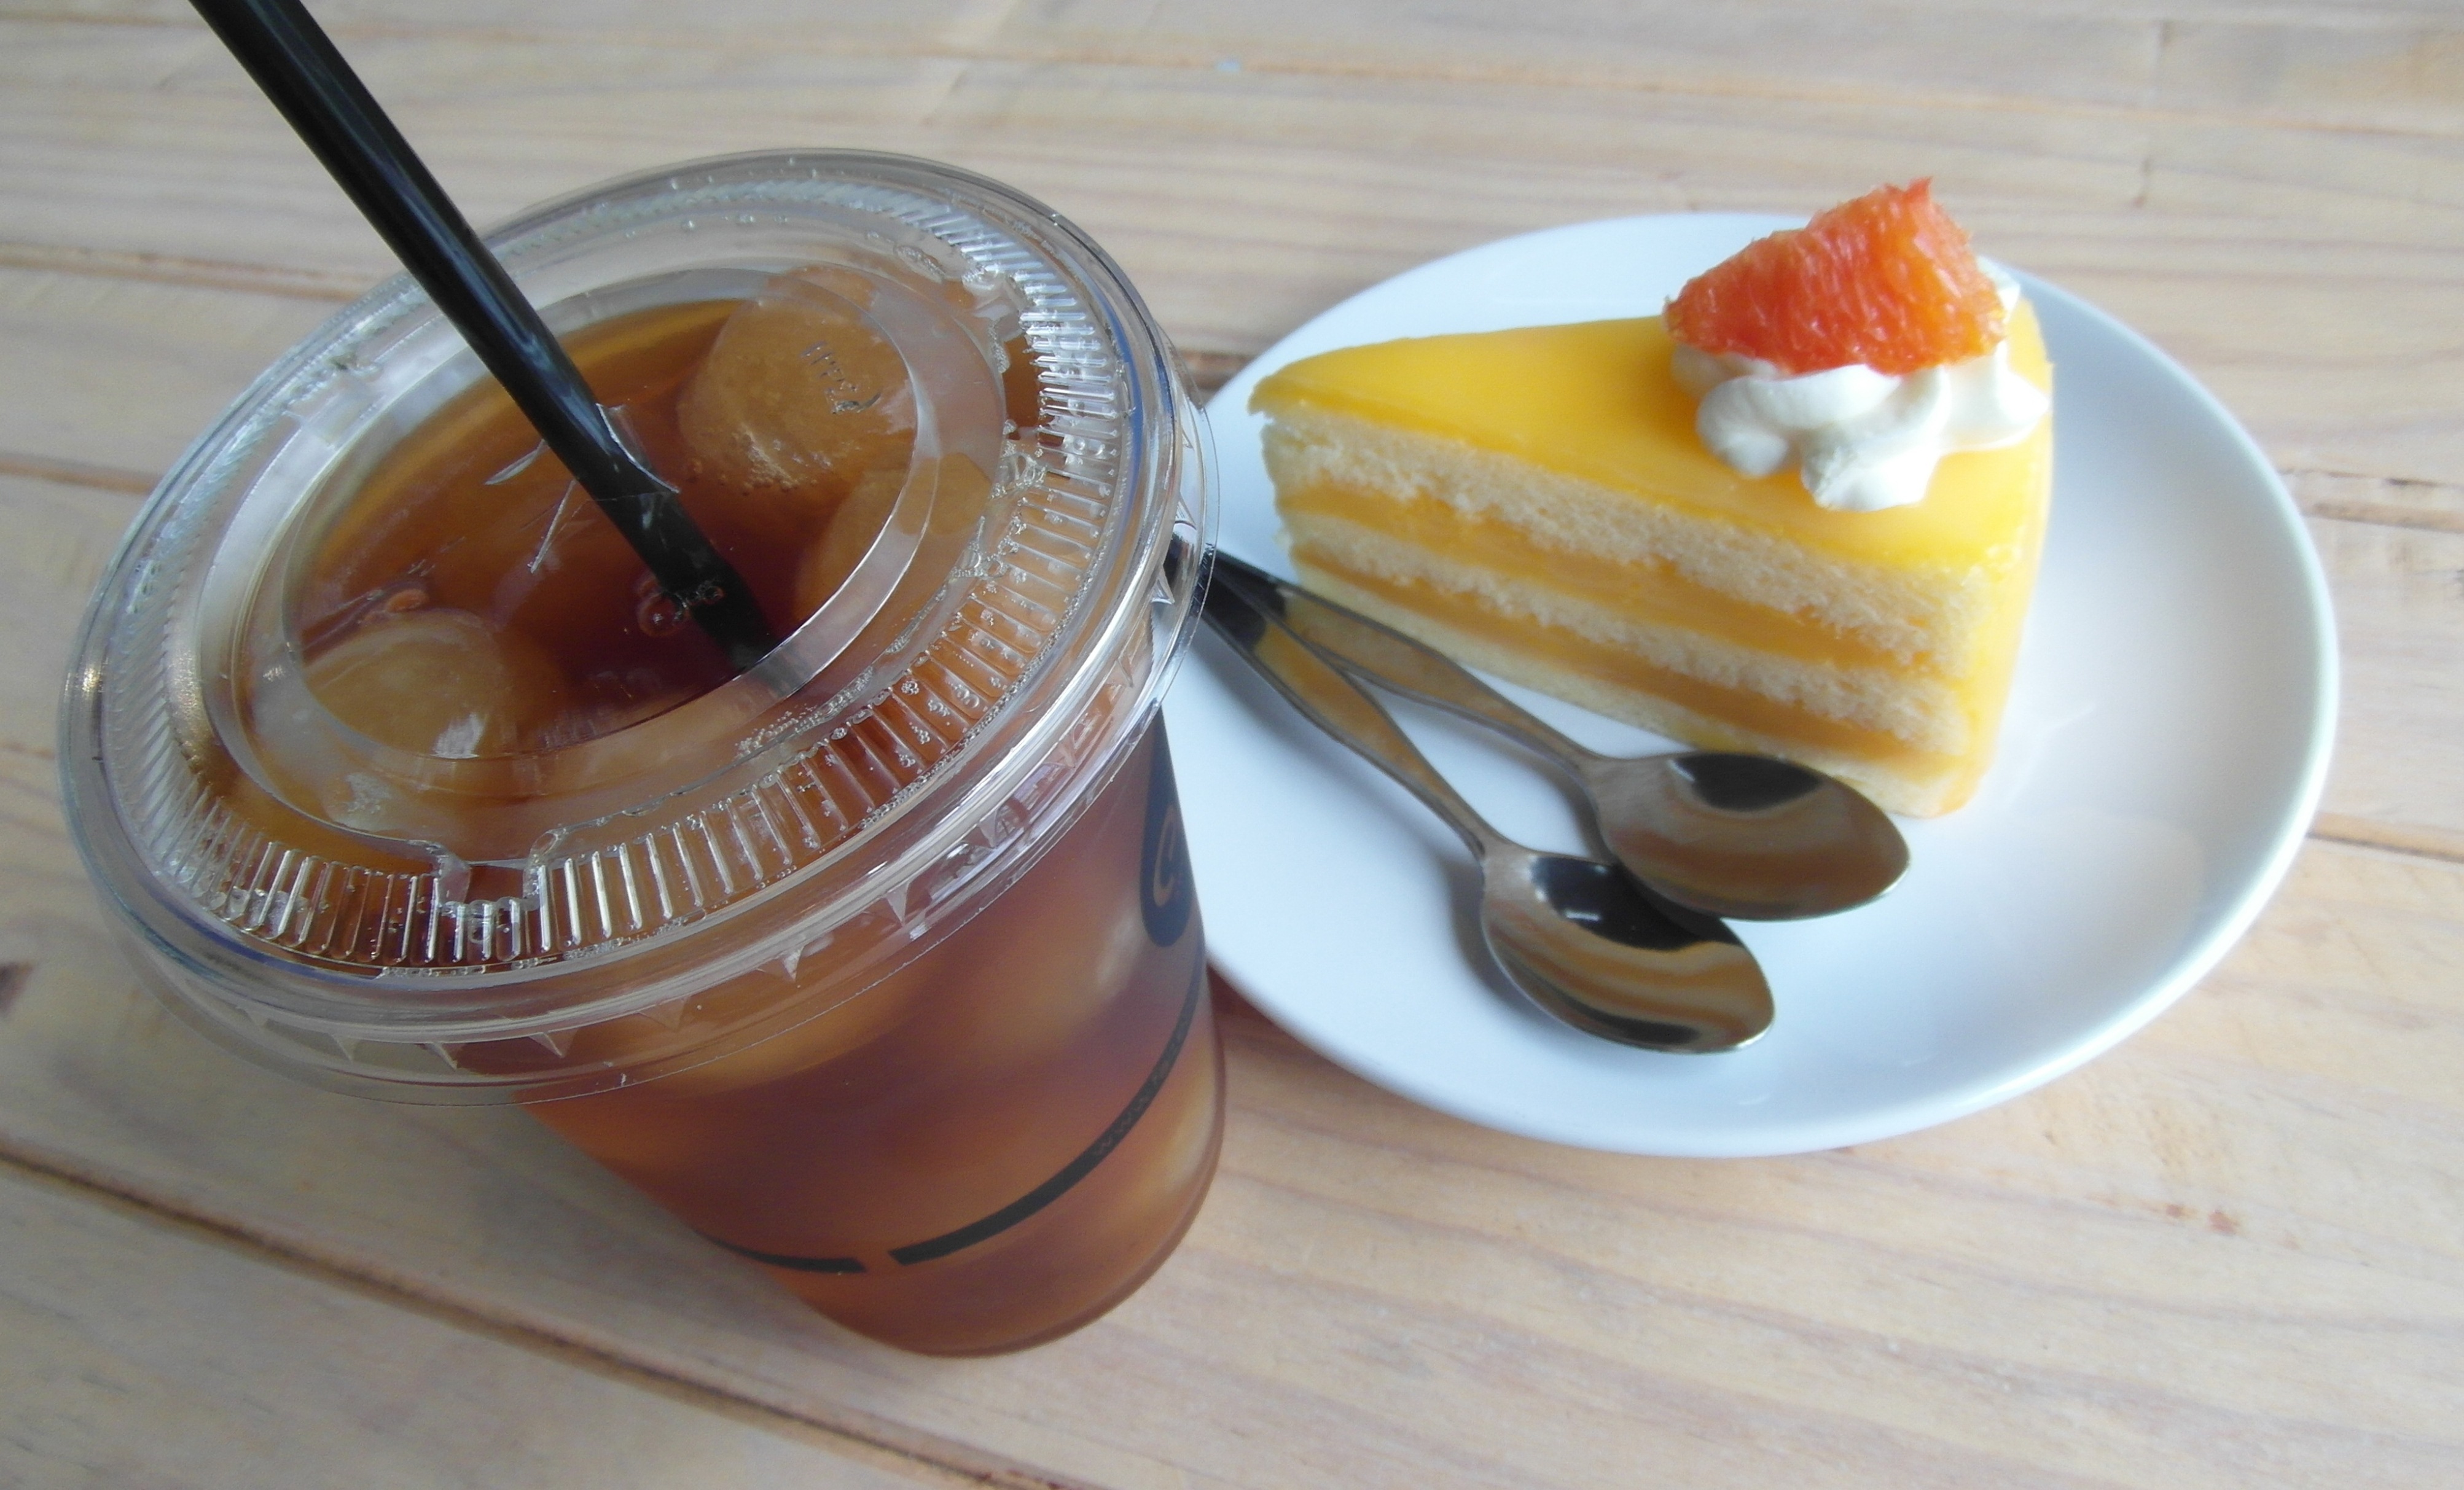 Iced tea and cake photo